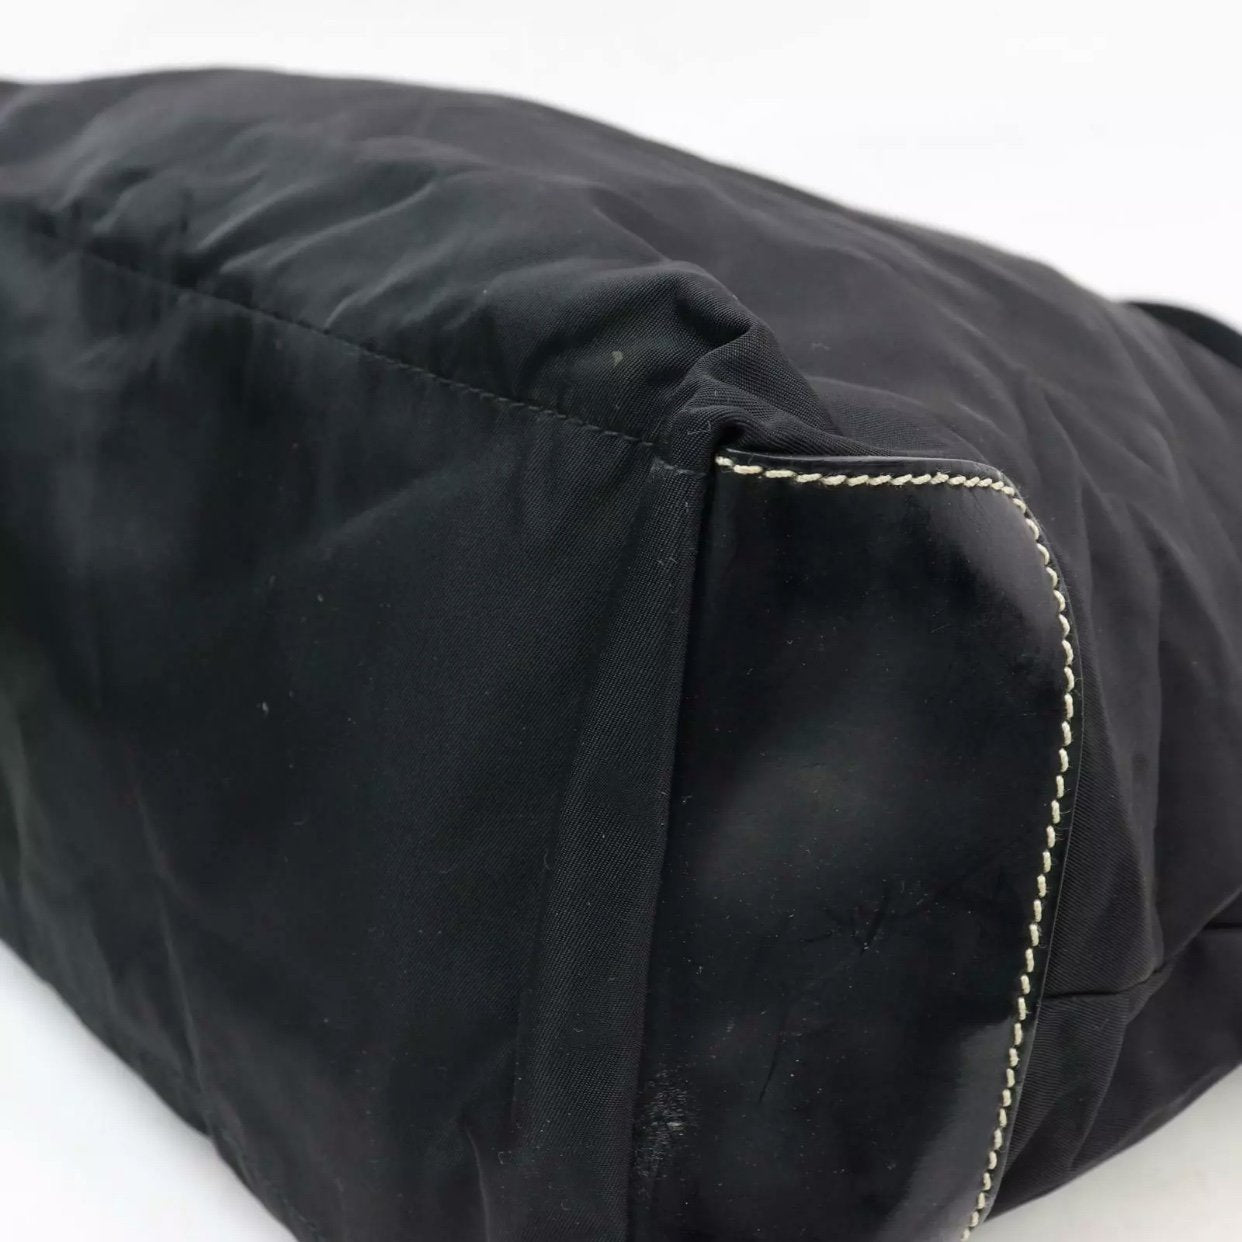 Prada Black Nylon and Leather Logo Duffel Bag Prada